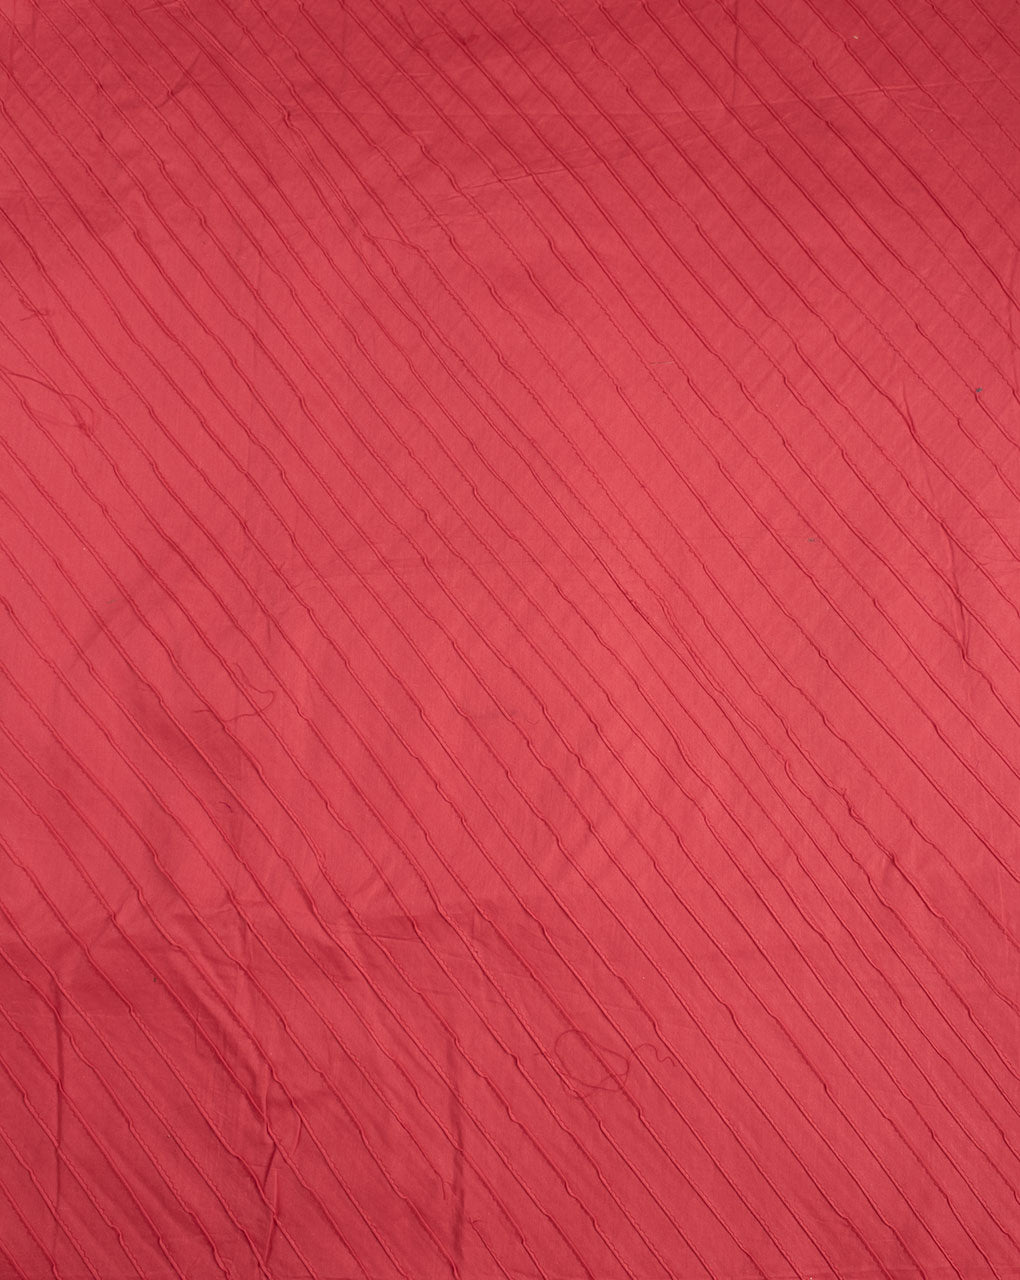 Salmon Pin-Tucks Cotton Fabric ( Width 40 Inch ) - Fabriclore.com